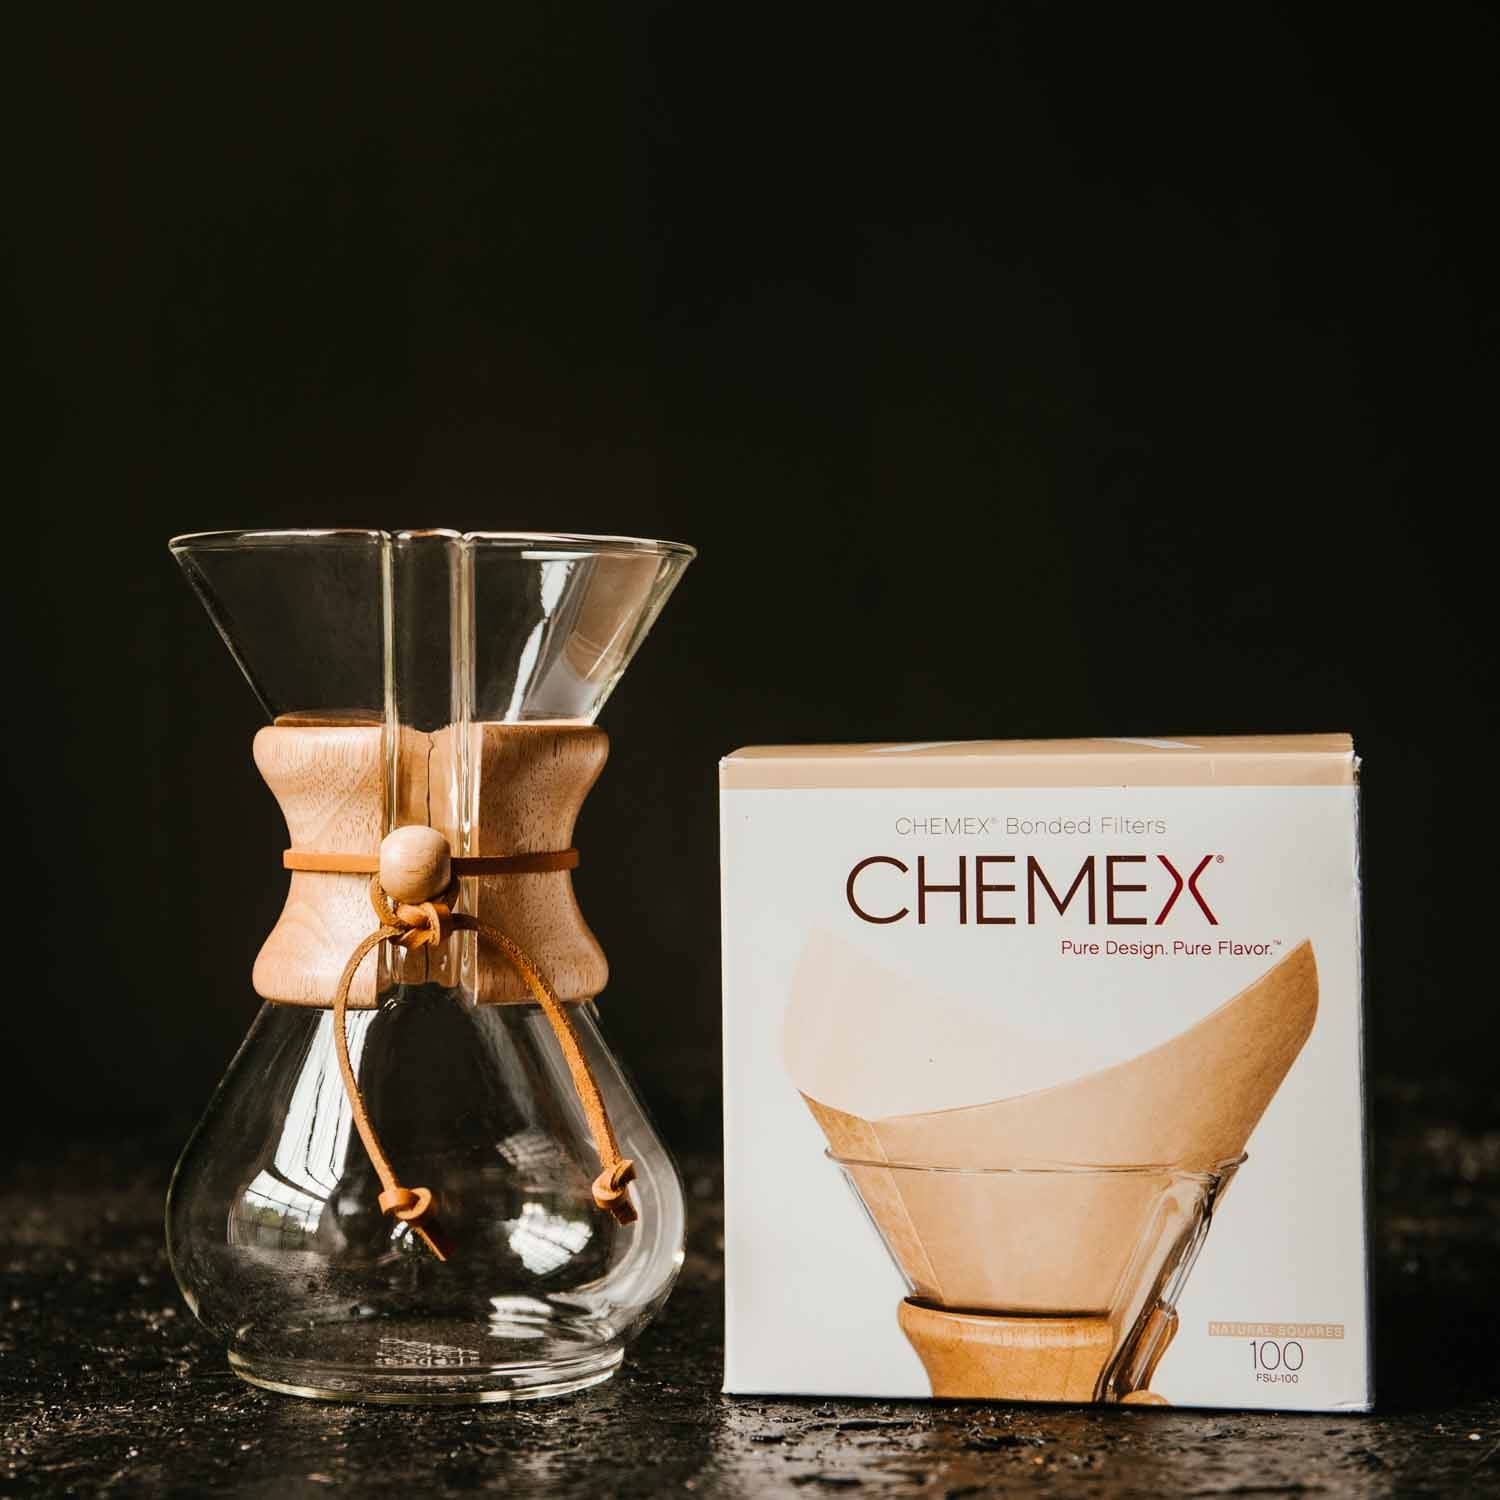 Chemex – The Well Coffeehouse